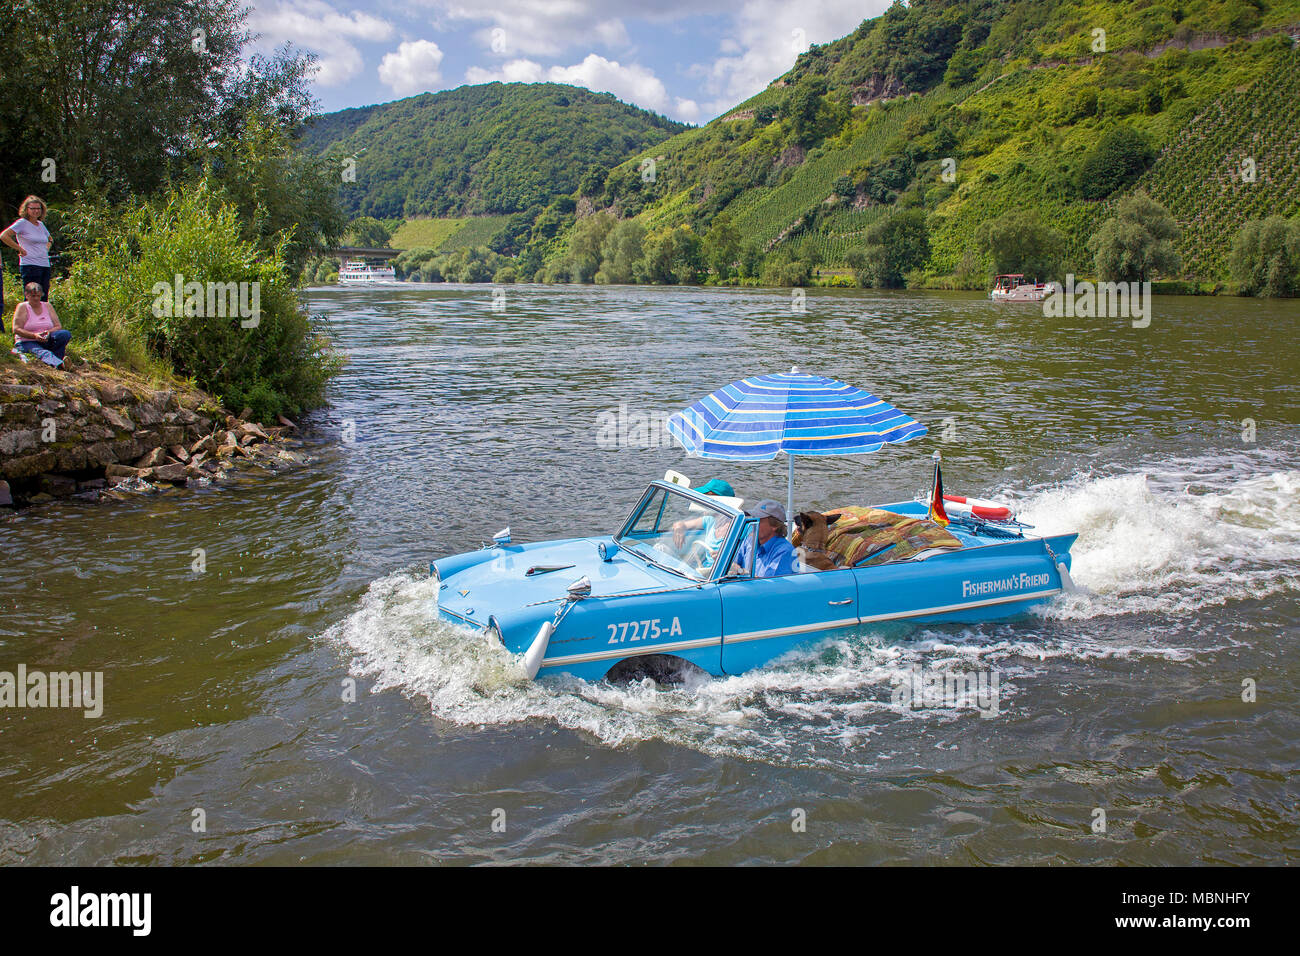 Amphic car, a german amphibious vehicle driving on Moselle river at Neumagen-Dhron, Rhineland-Palatinate, Germany Stock Photo